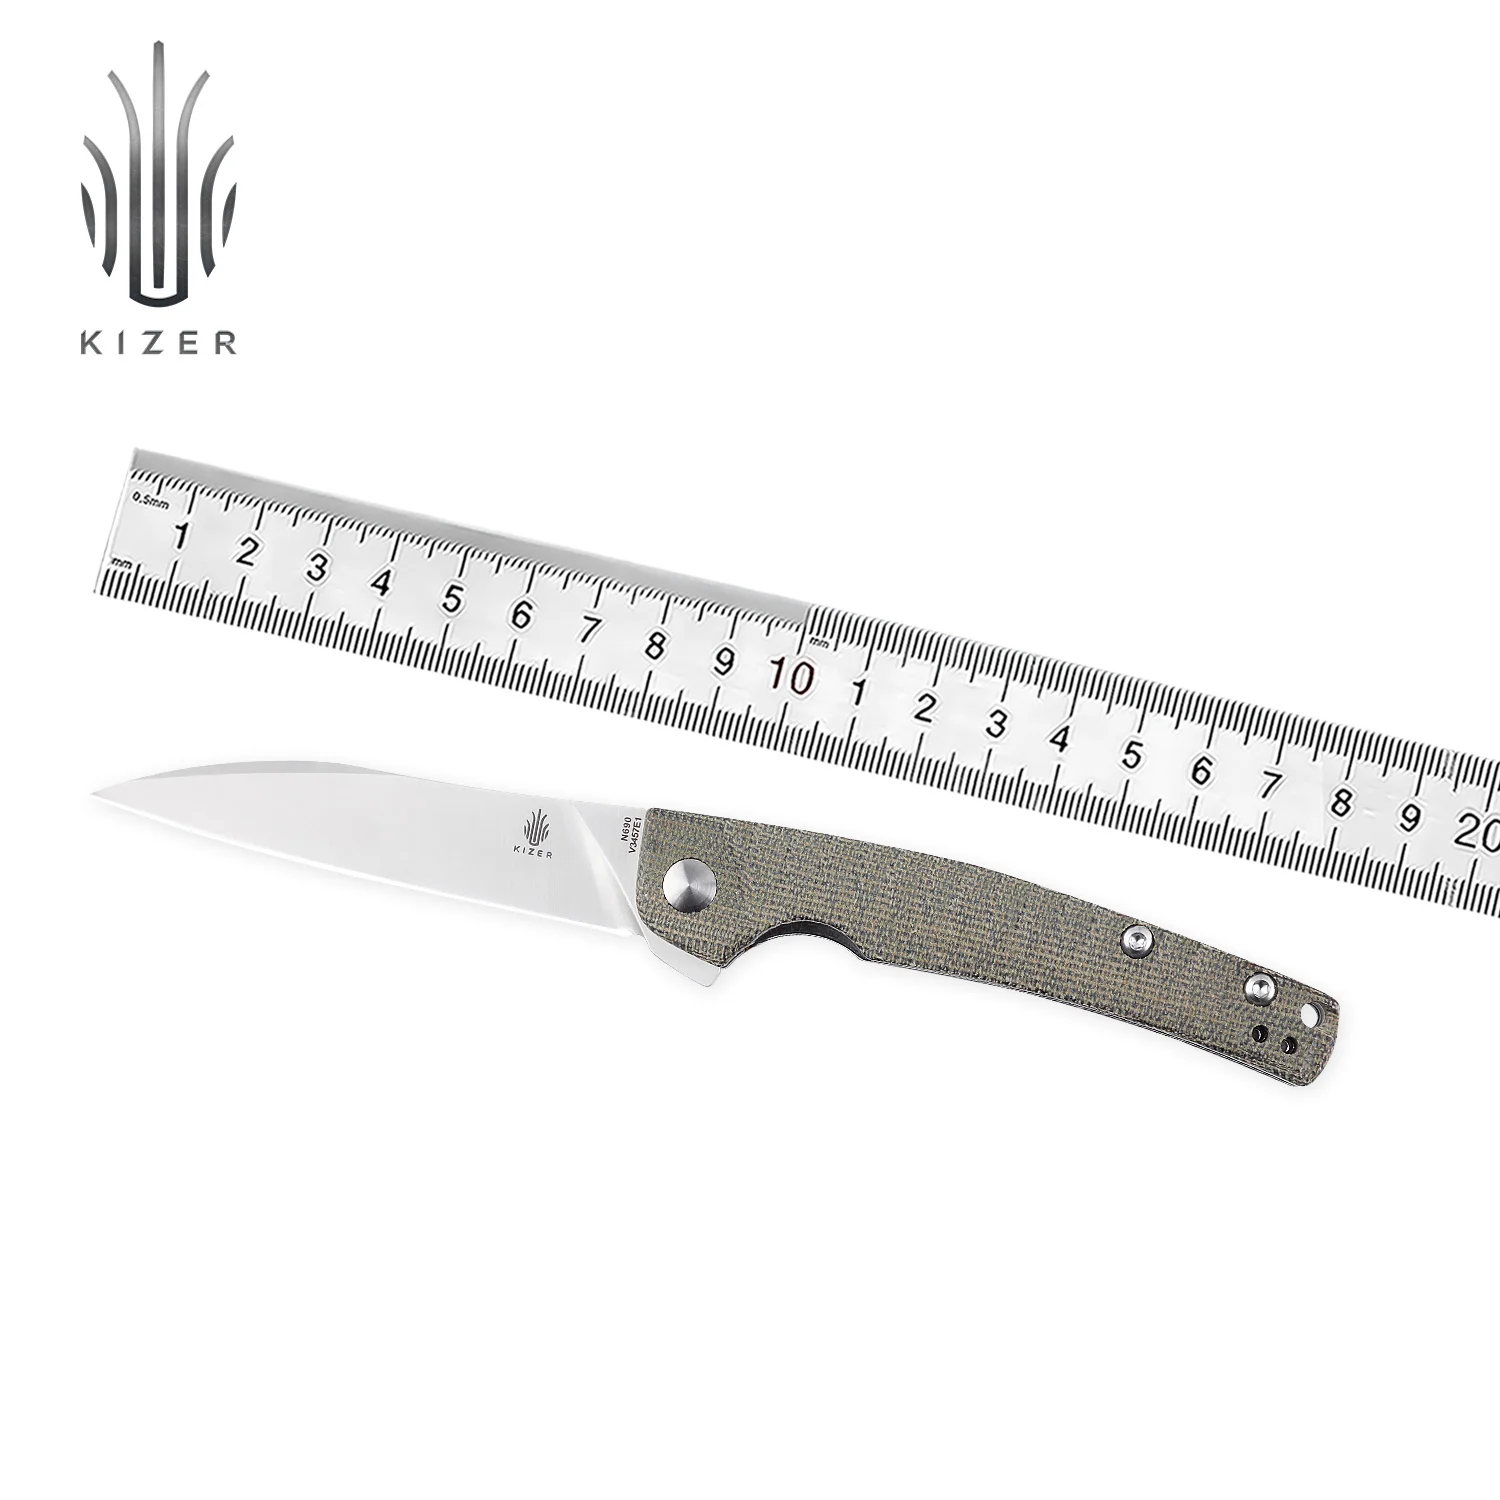 Kizer Mojave Exclusive Folding Knife Splinter V3457E1 Micarta Handle Outdoors Camping Hunting Tools 2021 New EDC Knife